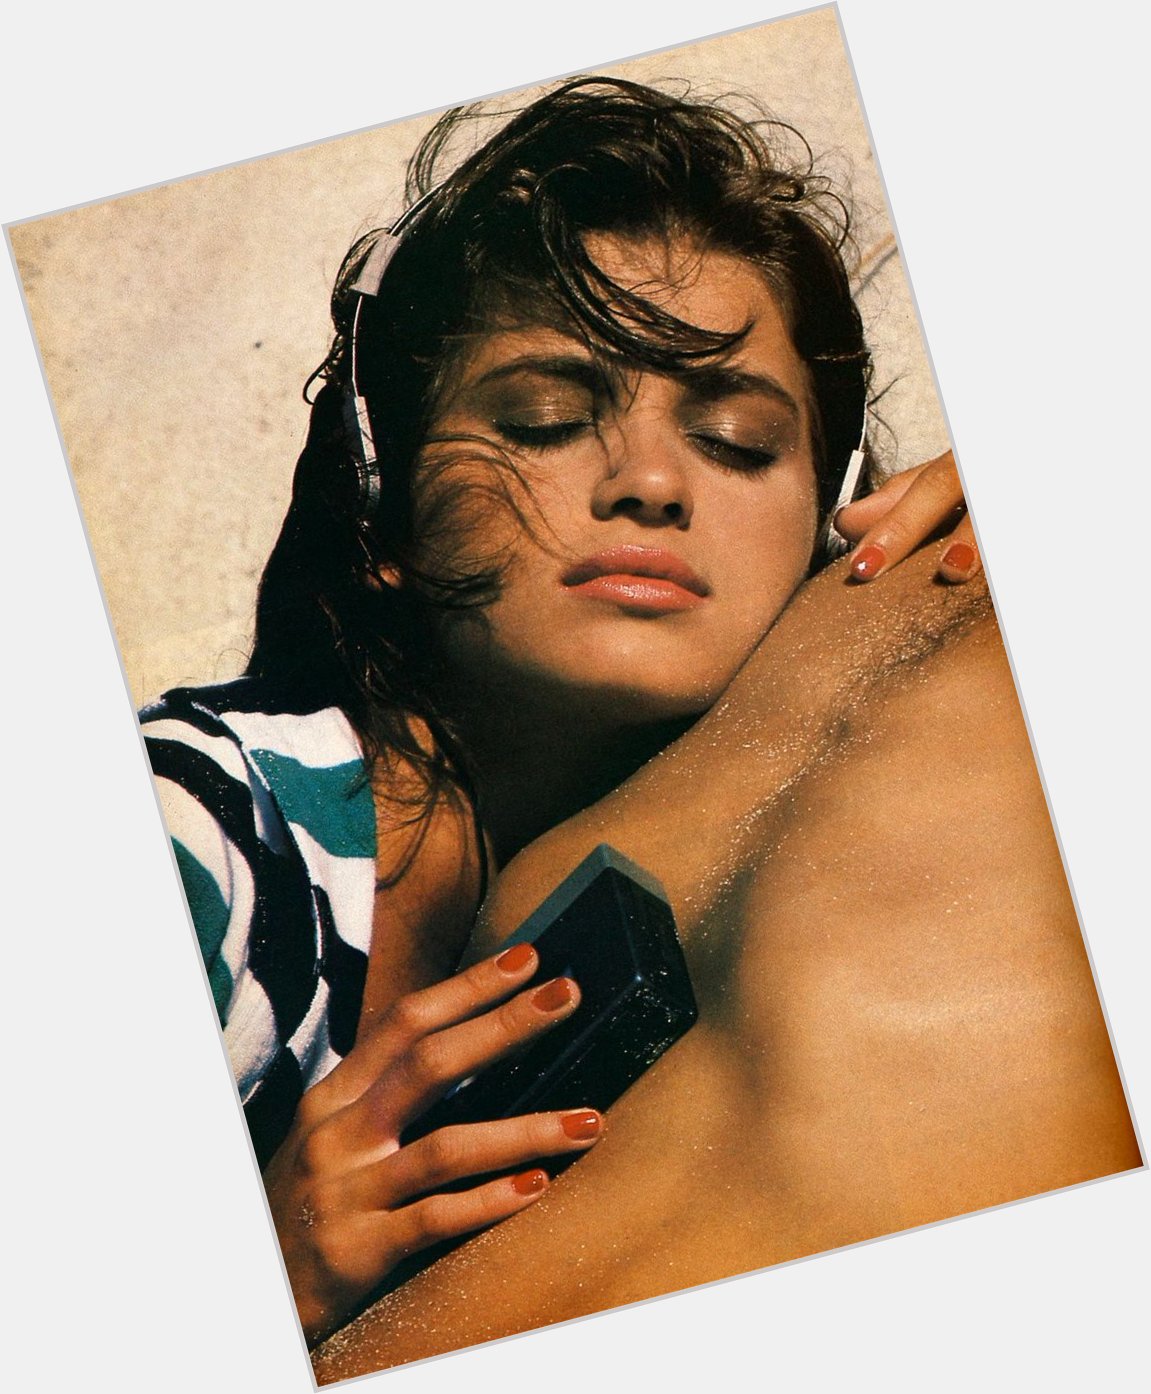 Happy Birthday Francesco Scavullo ~*~

Photo: Francesco Scavullo. Gia Carangi, Vogue, 1980. 